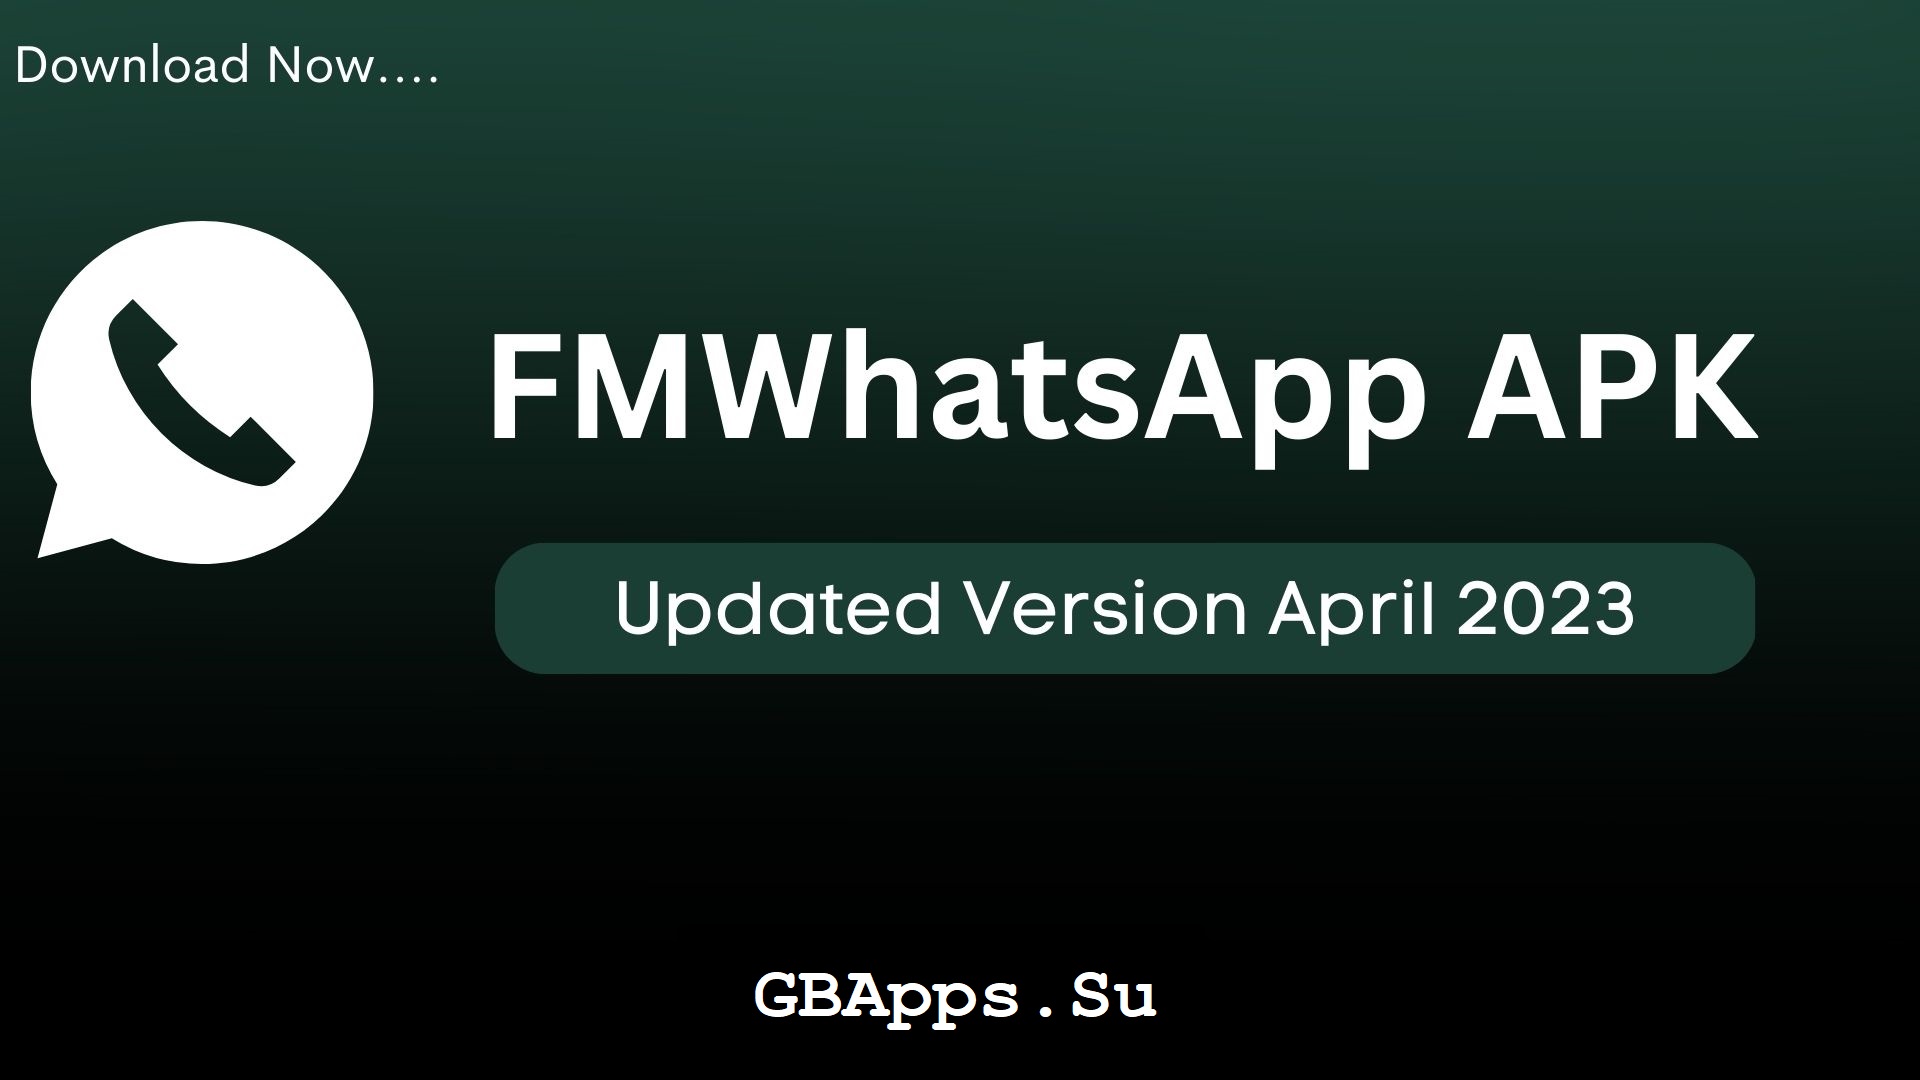 FMWhatsApp APK Download (Official) Latest Version April 2023